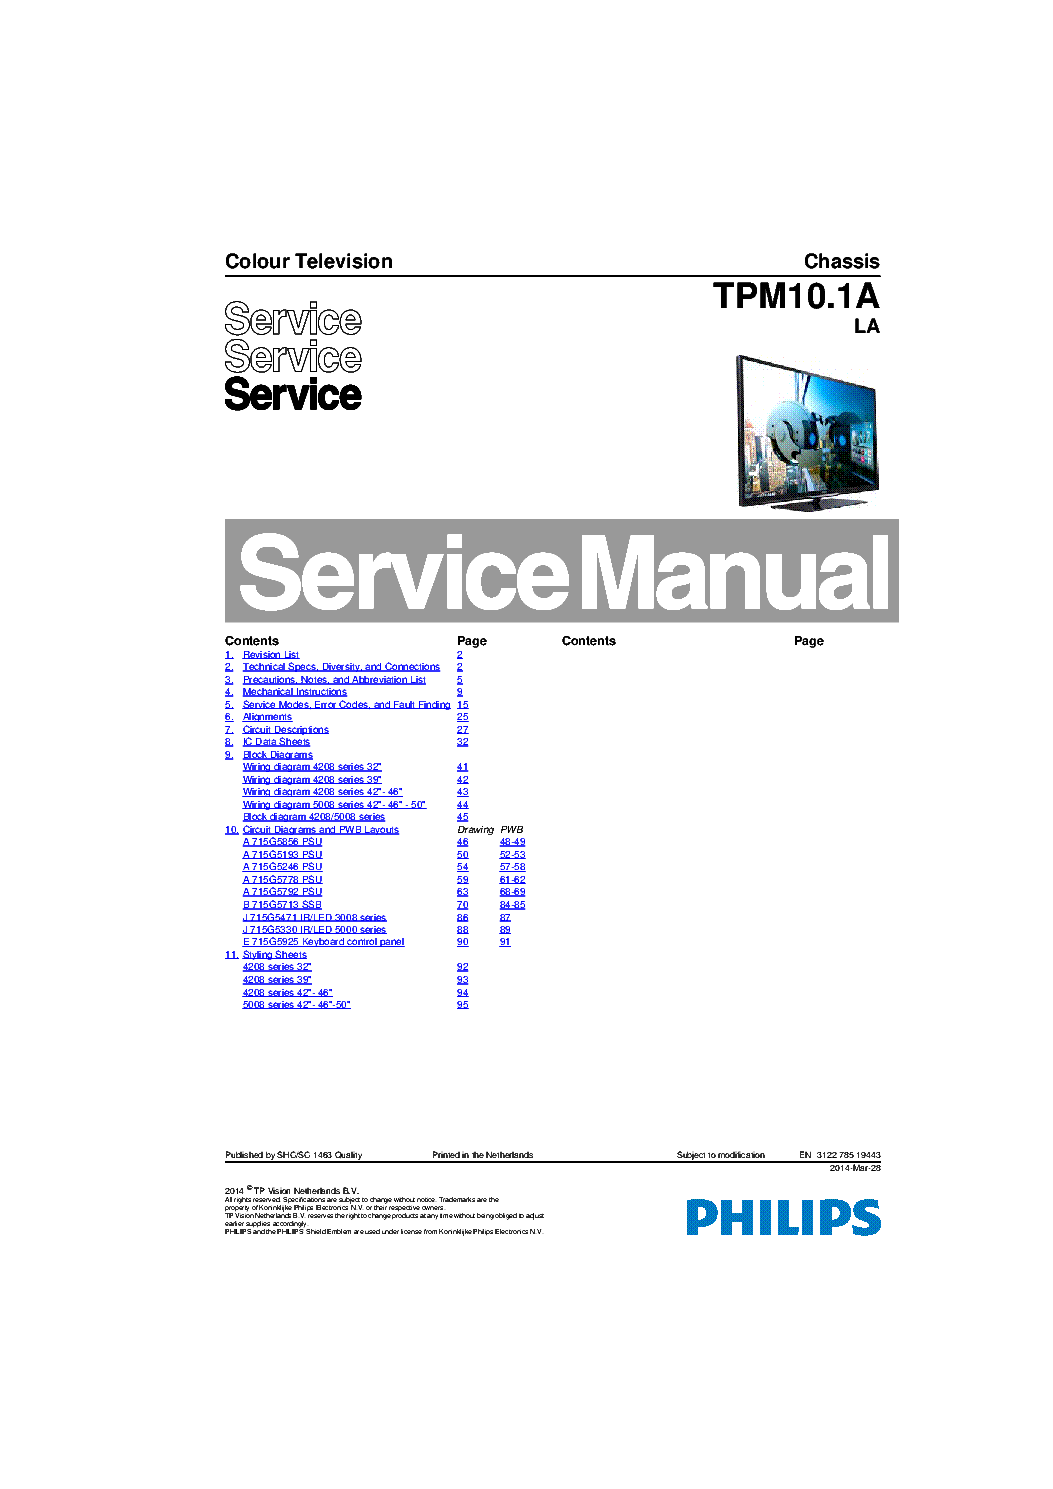 PHILIPS TPM10.1ALA 312278519443 140328 SM service manual (1st page)